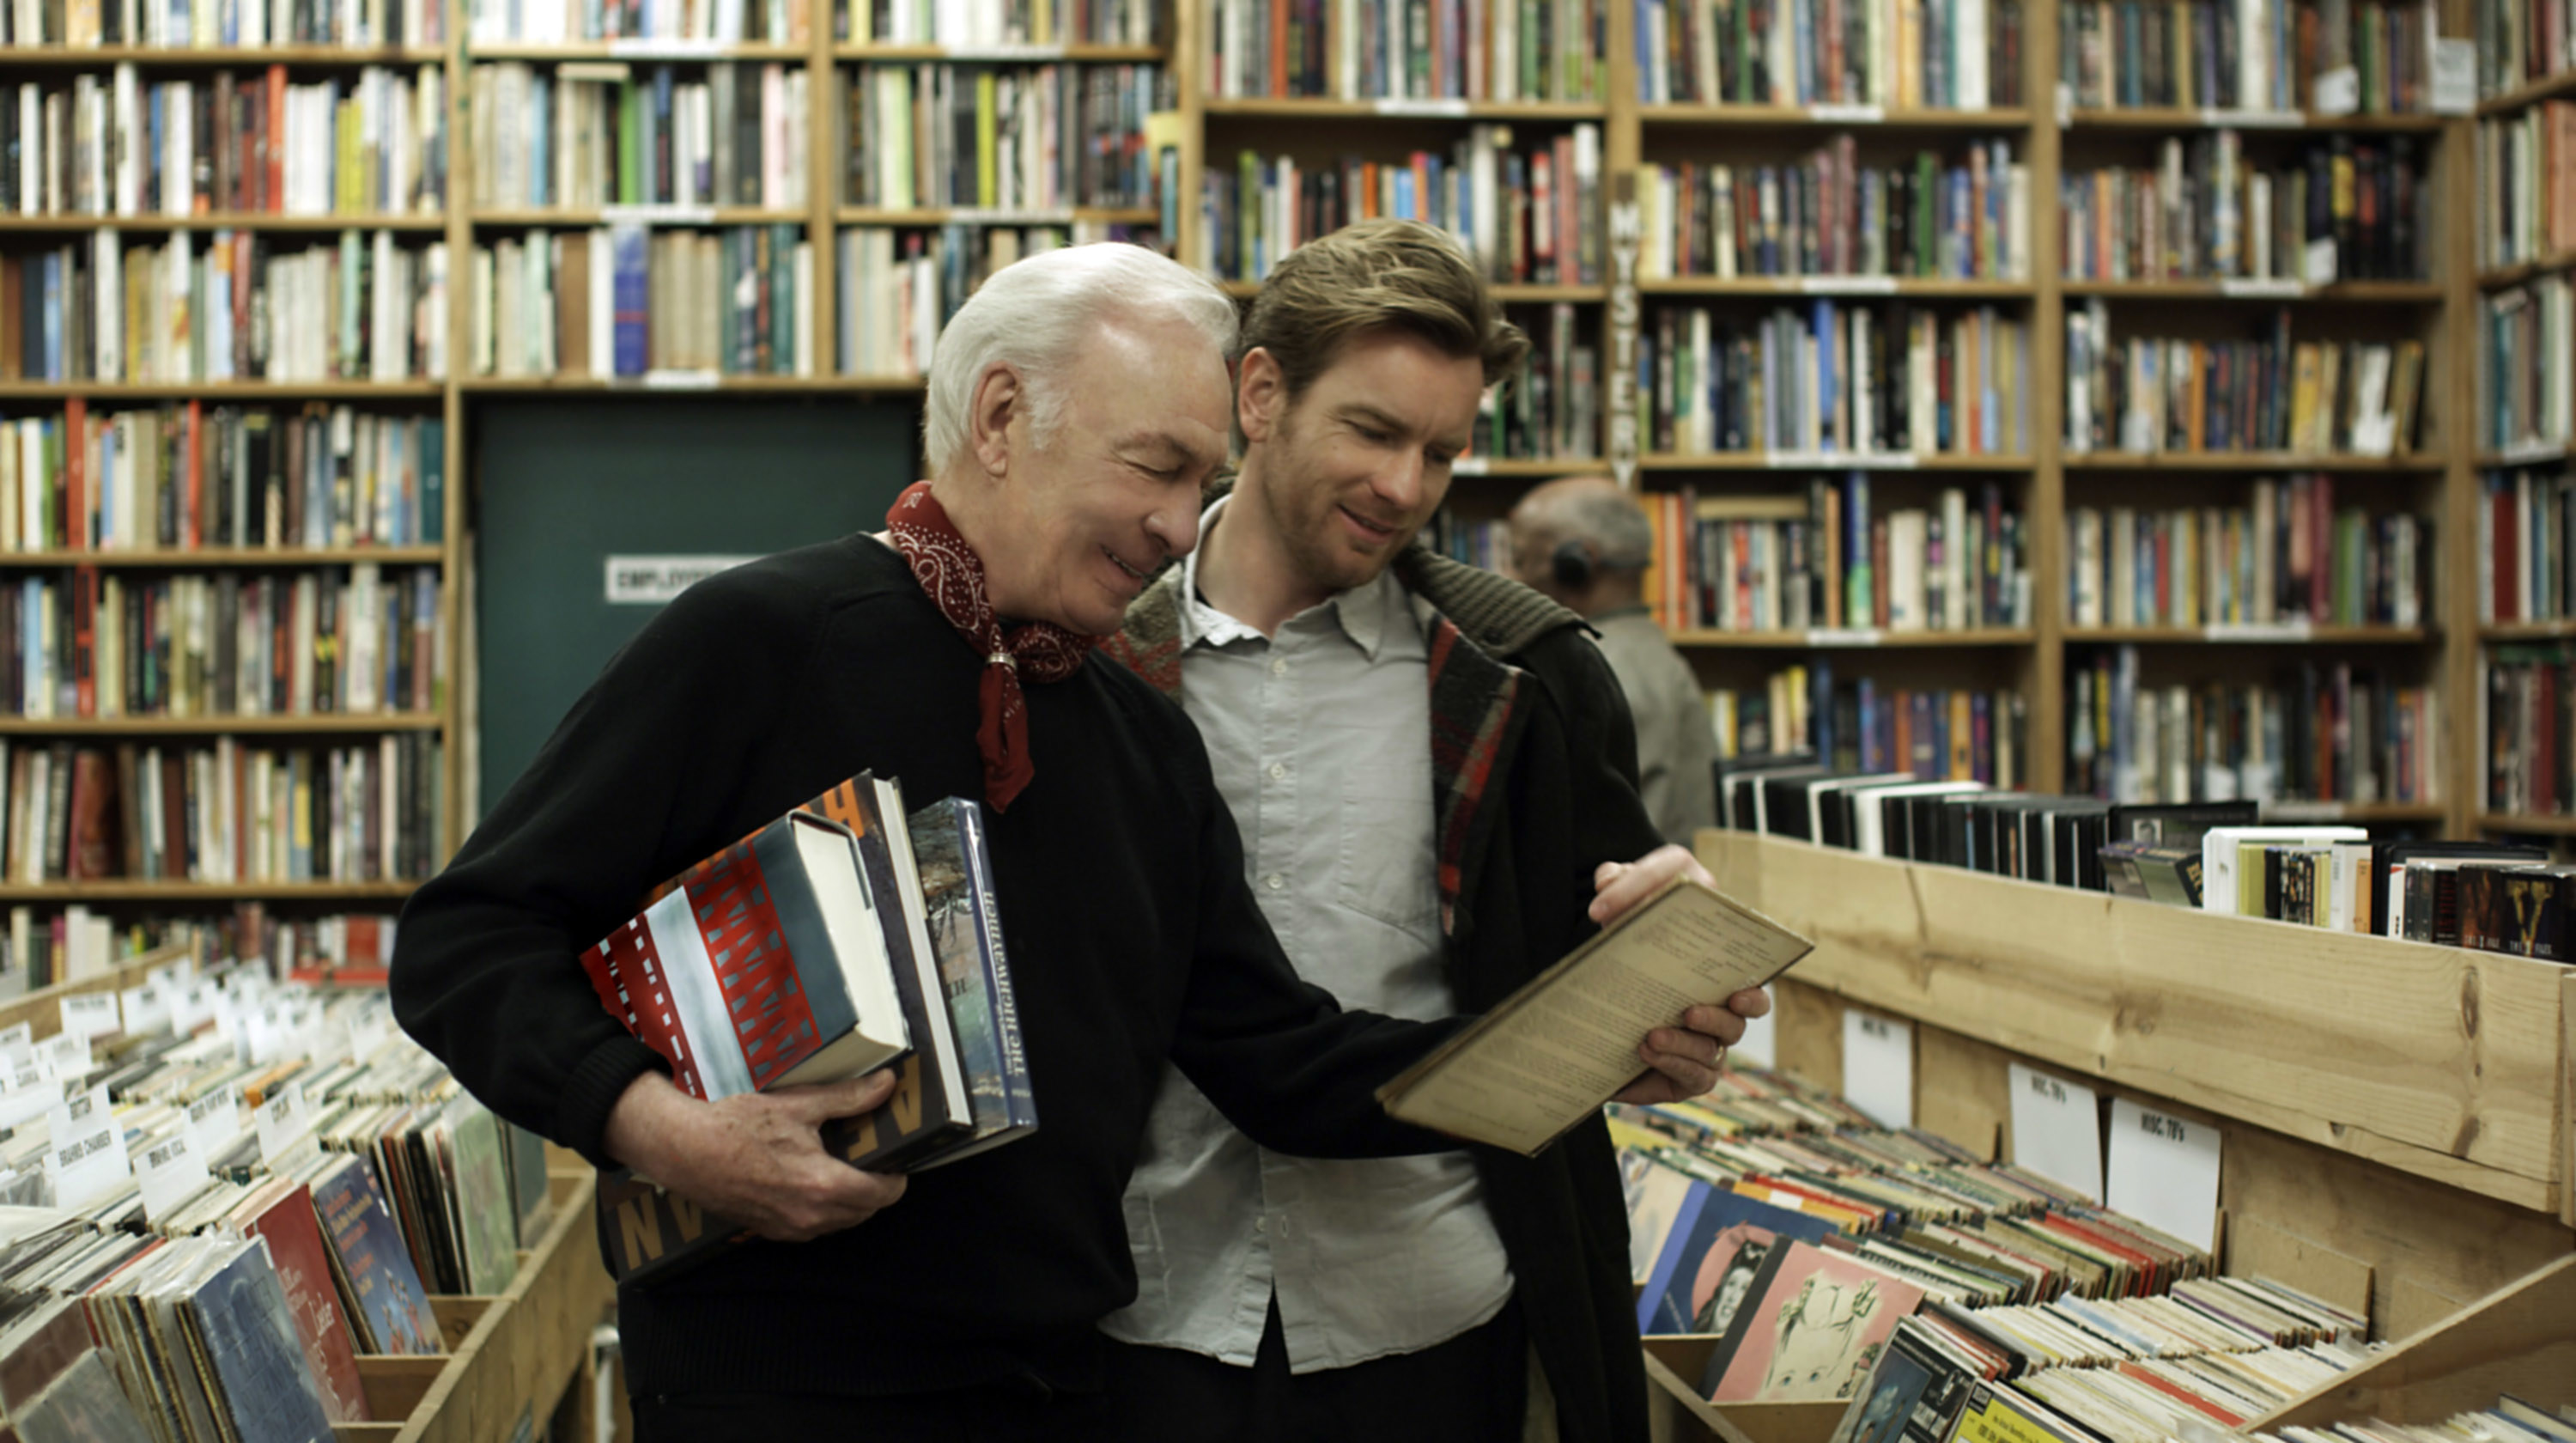 Christopher Plummer and Ewan McGregor look at records together